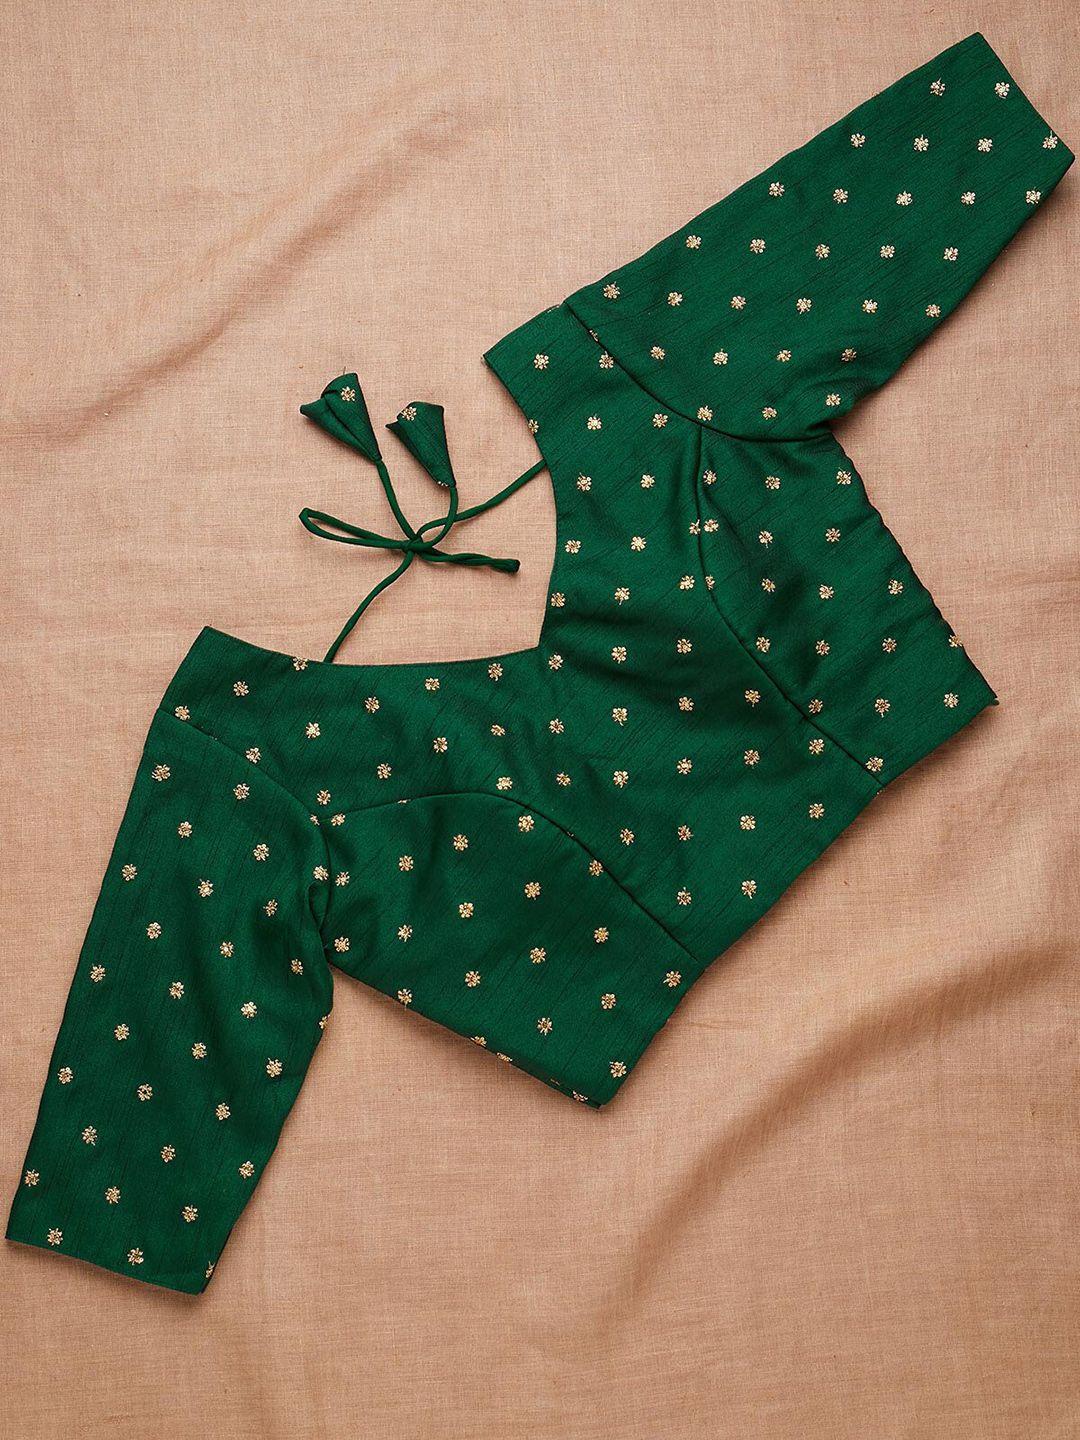 koskii-green-embroidered-saree-blouse